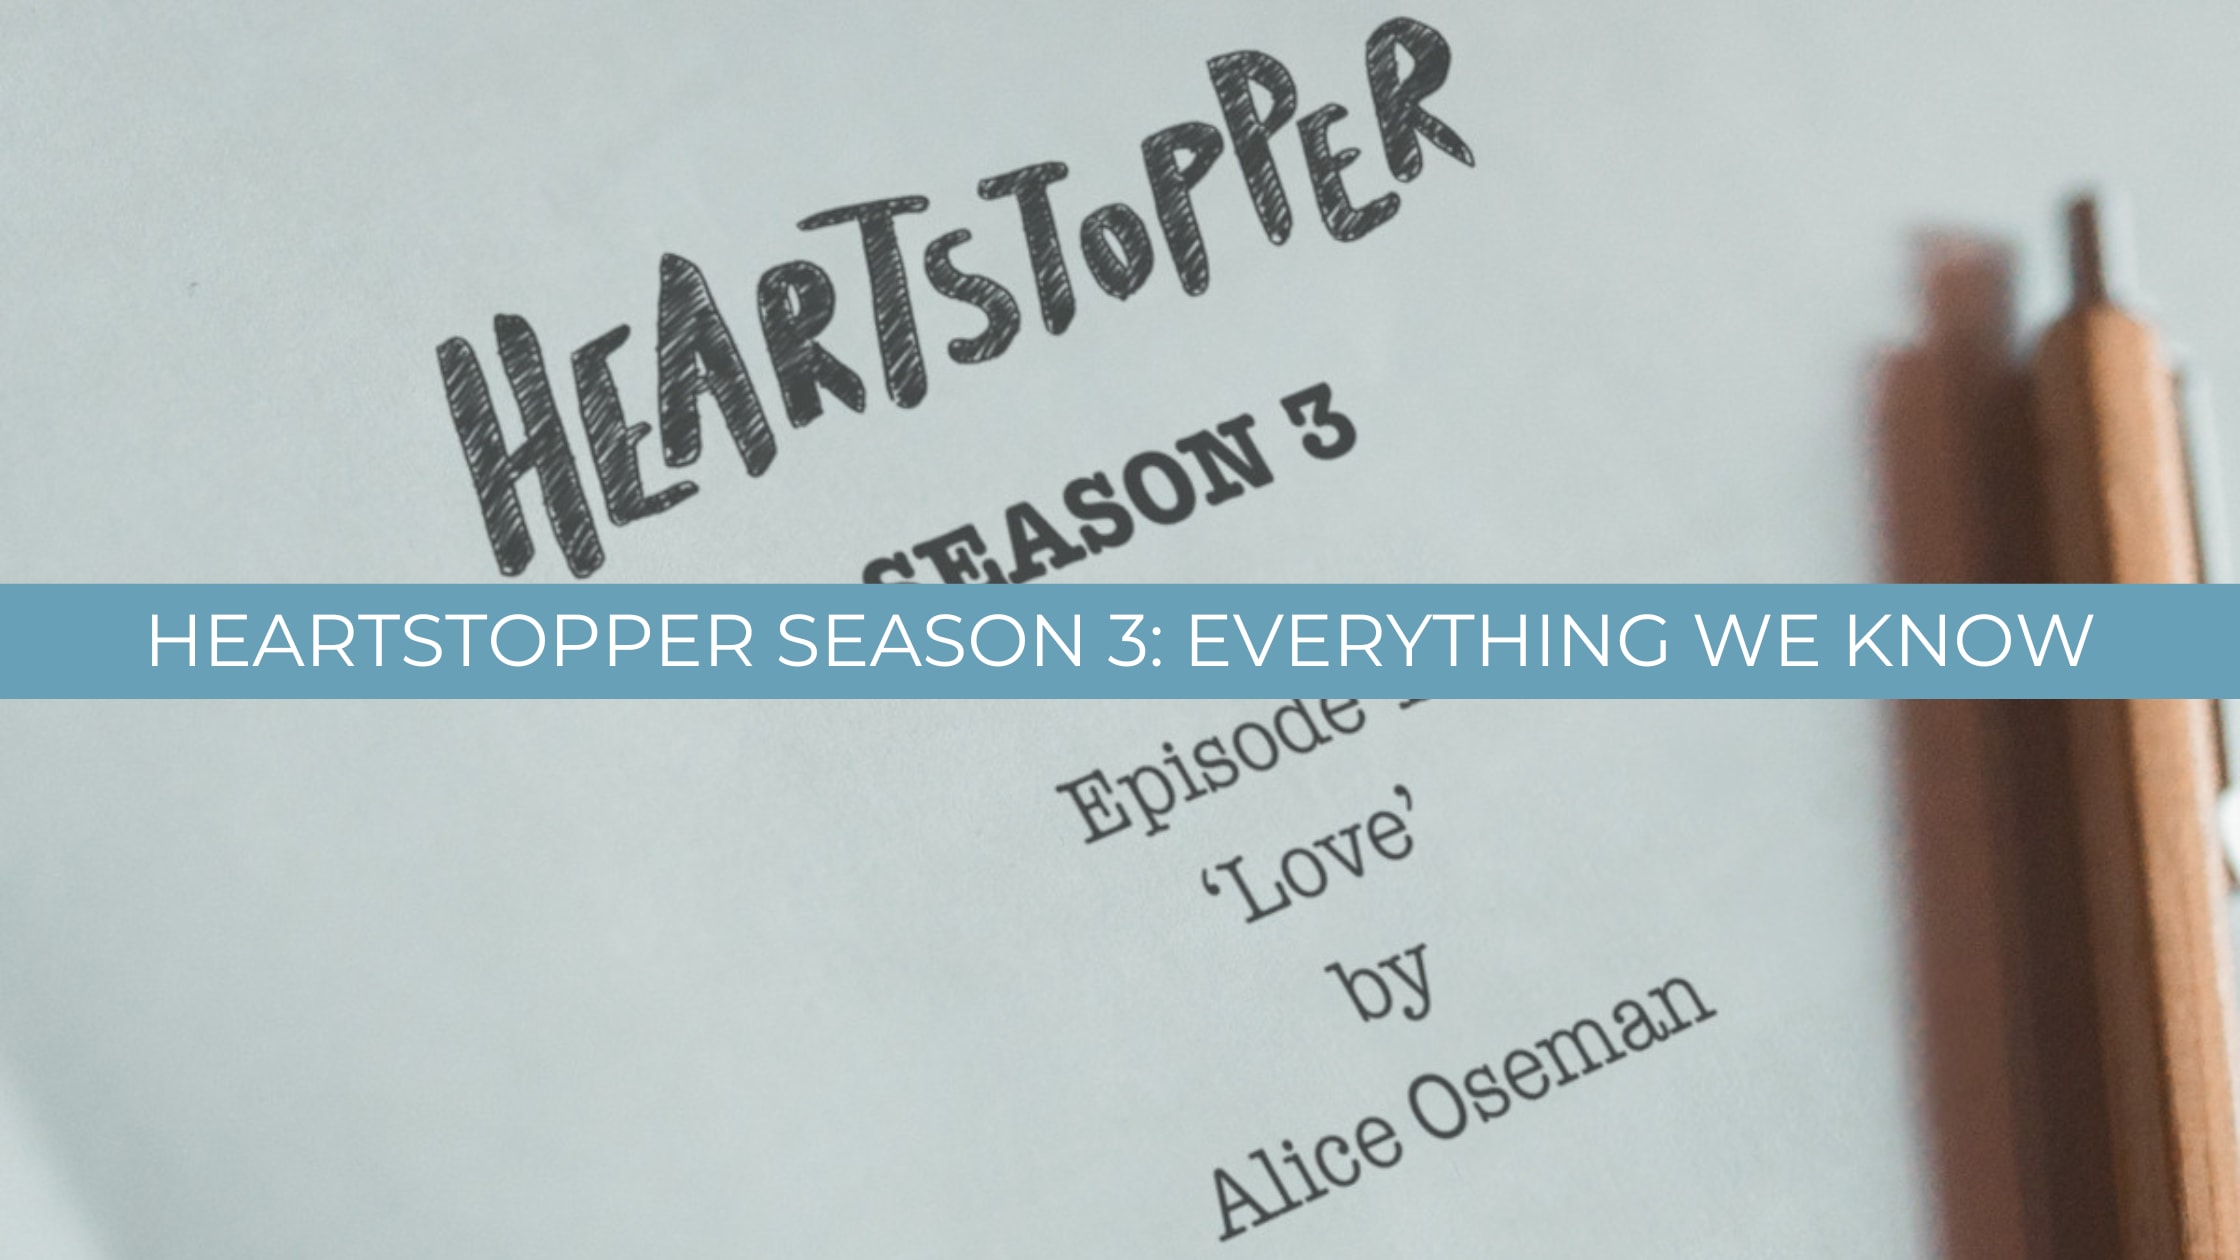 Heartstopper” Season 2: Everything We Know so Far